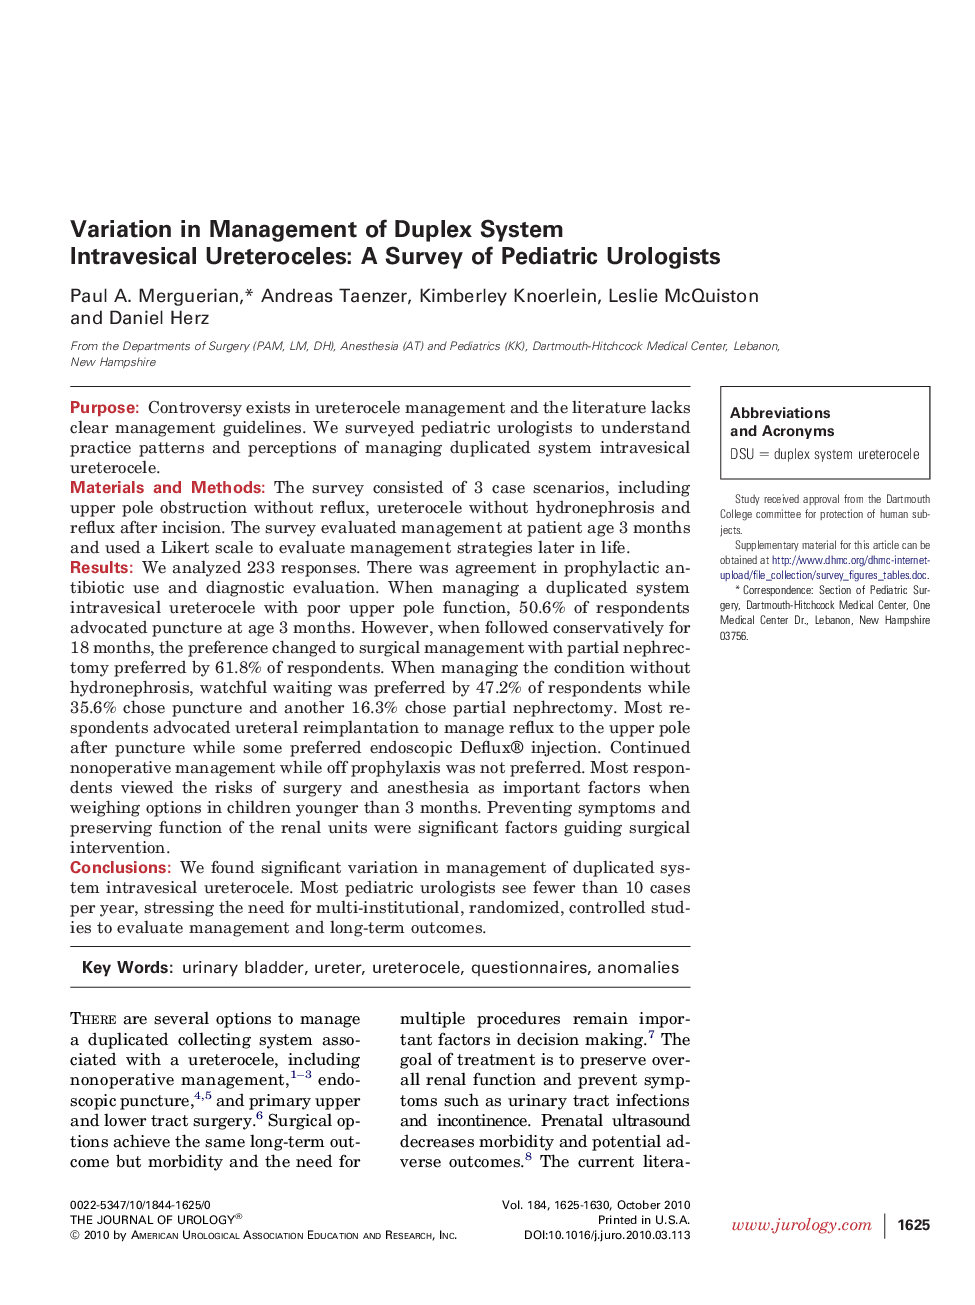 Variation in Management of Duplex System Intravesical Ureteroceles: A Survey of Pediatric Urologists